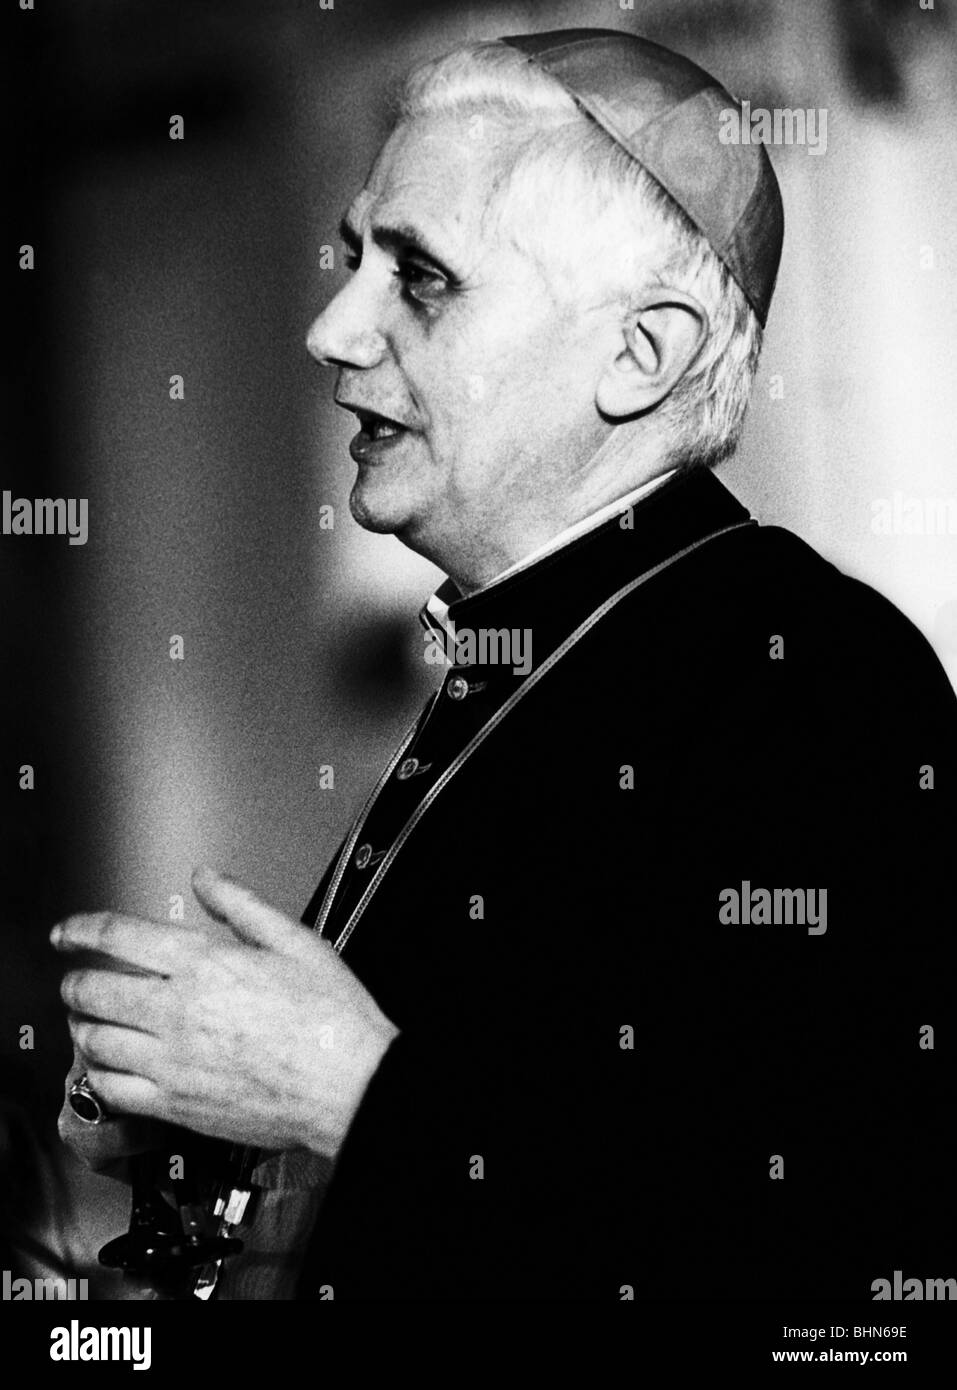 Benedict VI (Josef Ratzinger), * 16.4.1927, pope since 19.4.2005, portrait, giving a speech, during the Romano Guardini Award ceremony, 3.2.1985, Stock Photo